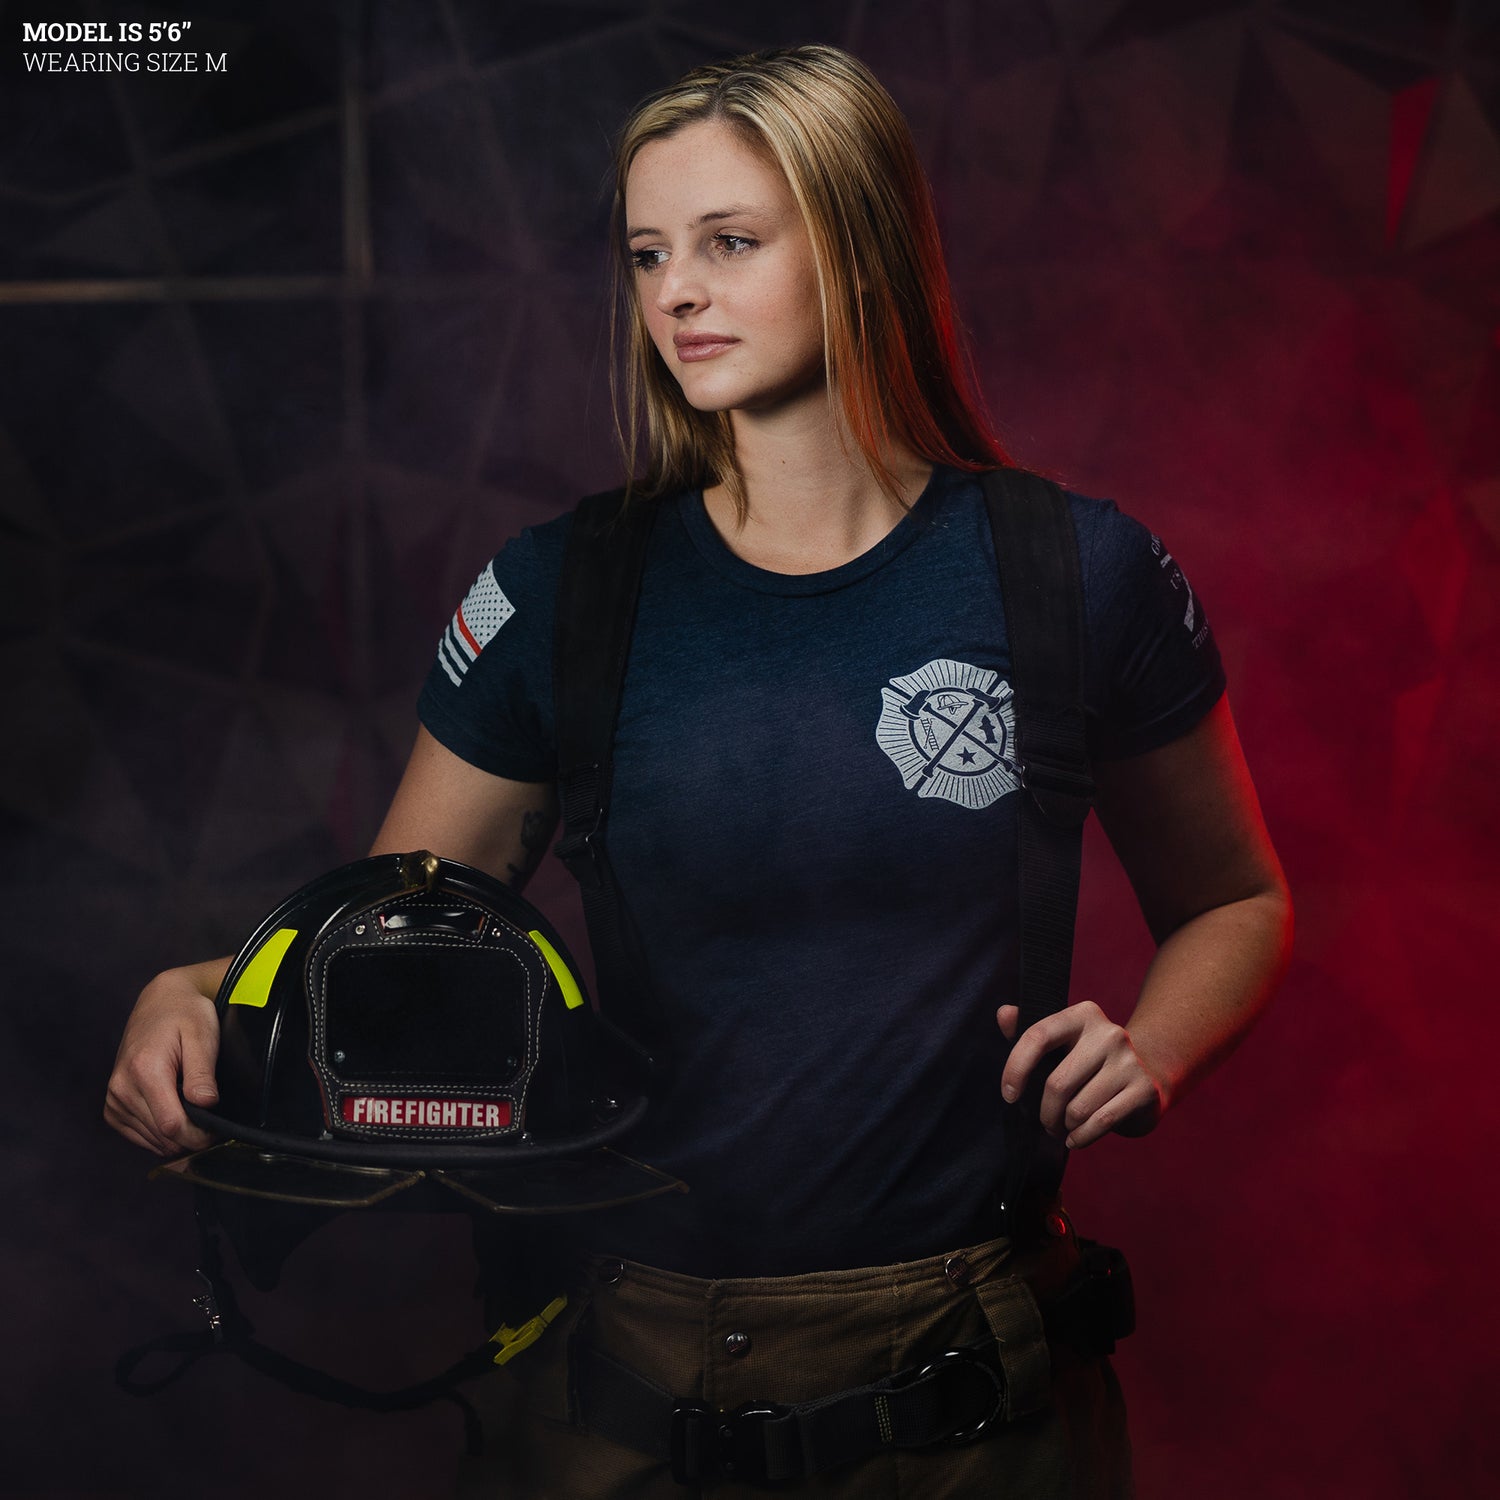 Firefighter Shirts for Women 